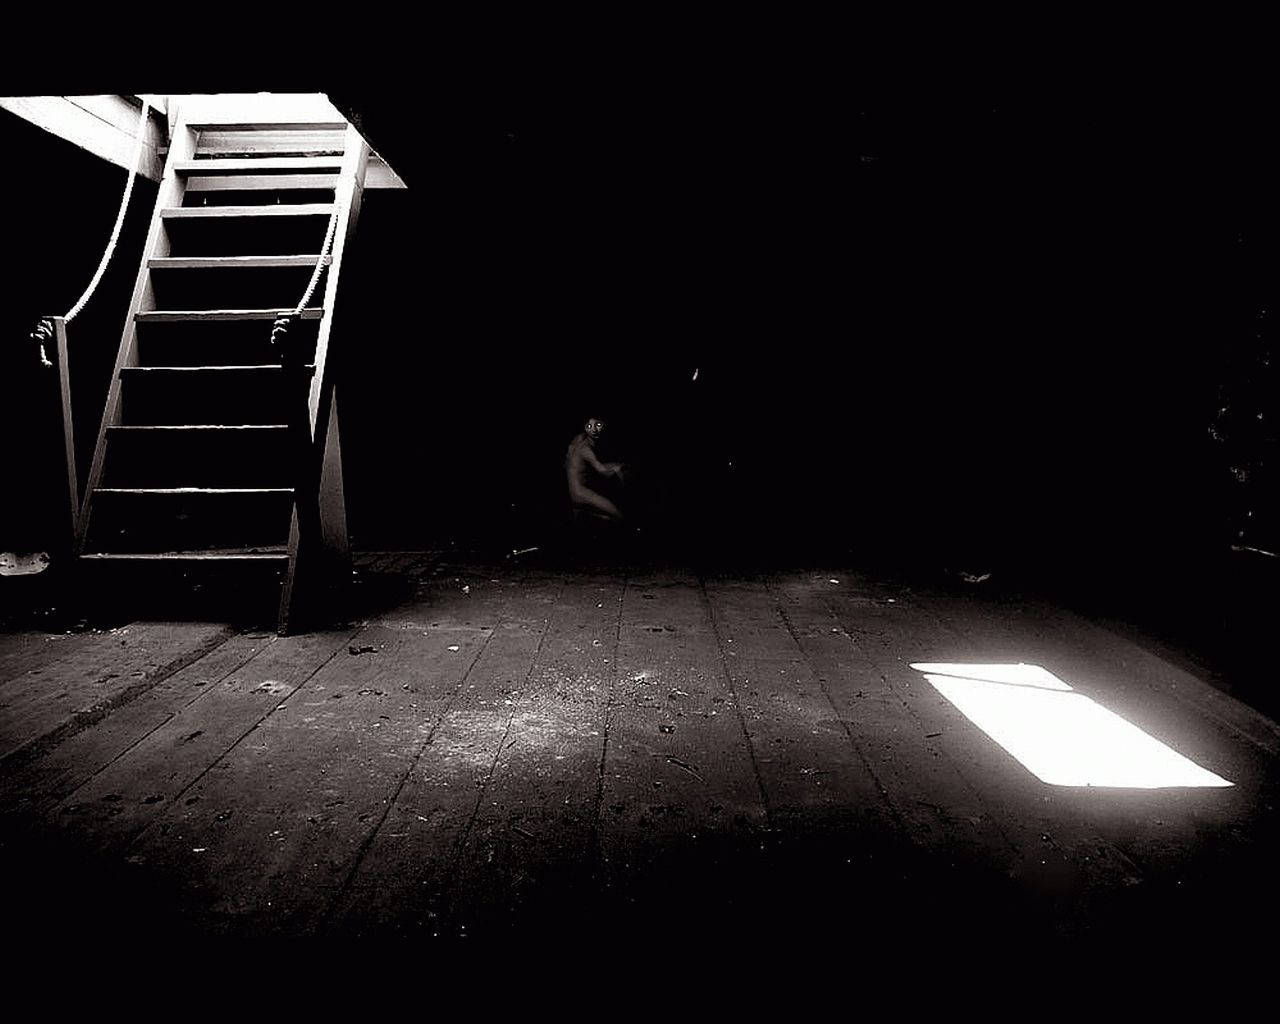 A person sitting in the dark near a ladder. - Creepy, 1280x1024